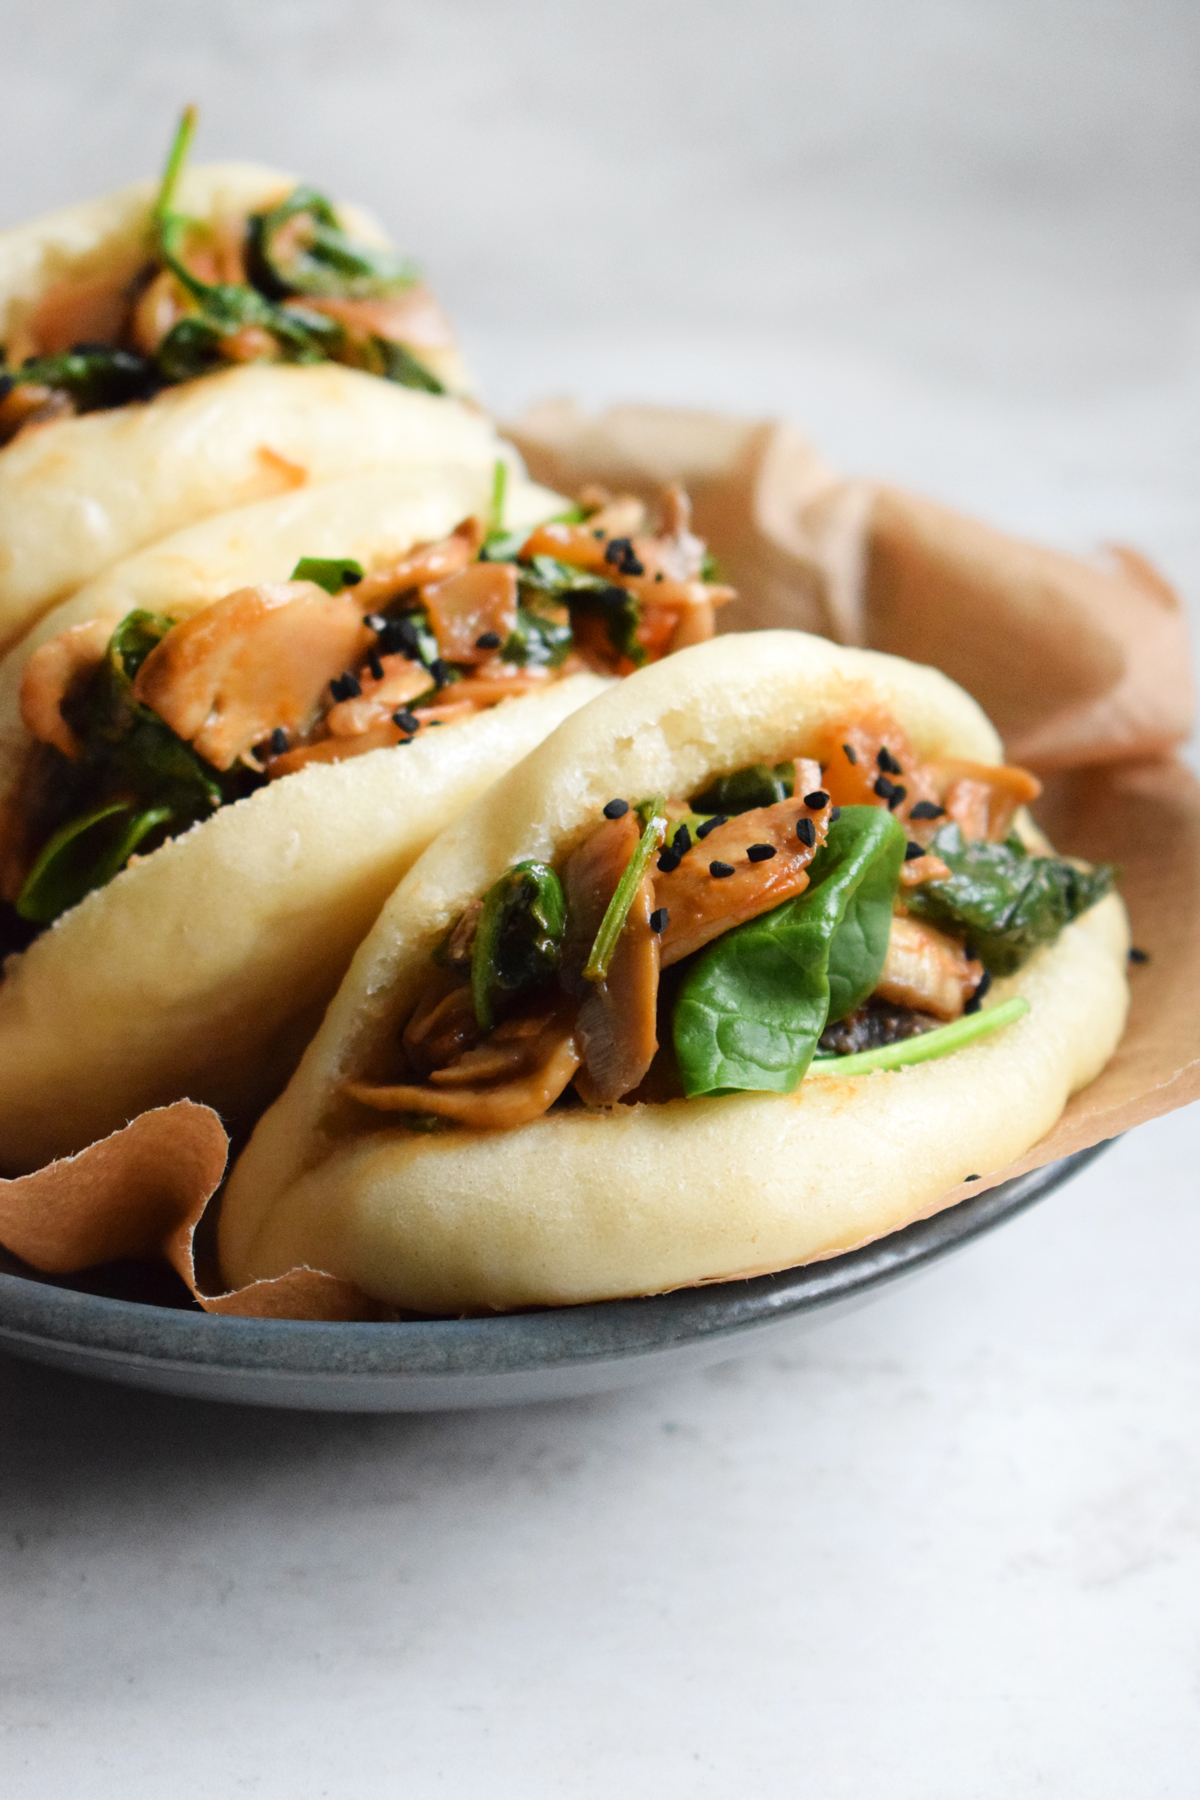 Vegan Bao Buns with Mushroom Filling - Let's Eat Smart